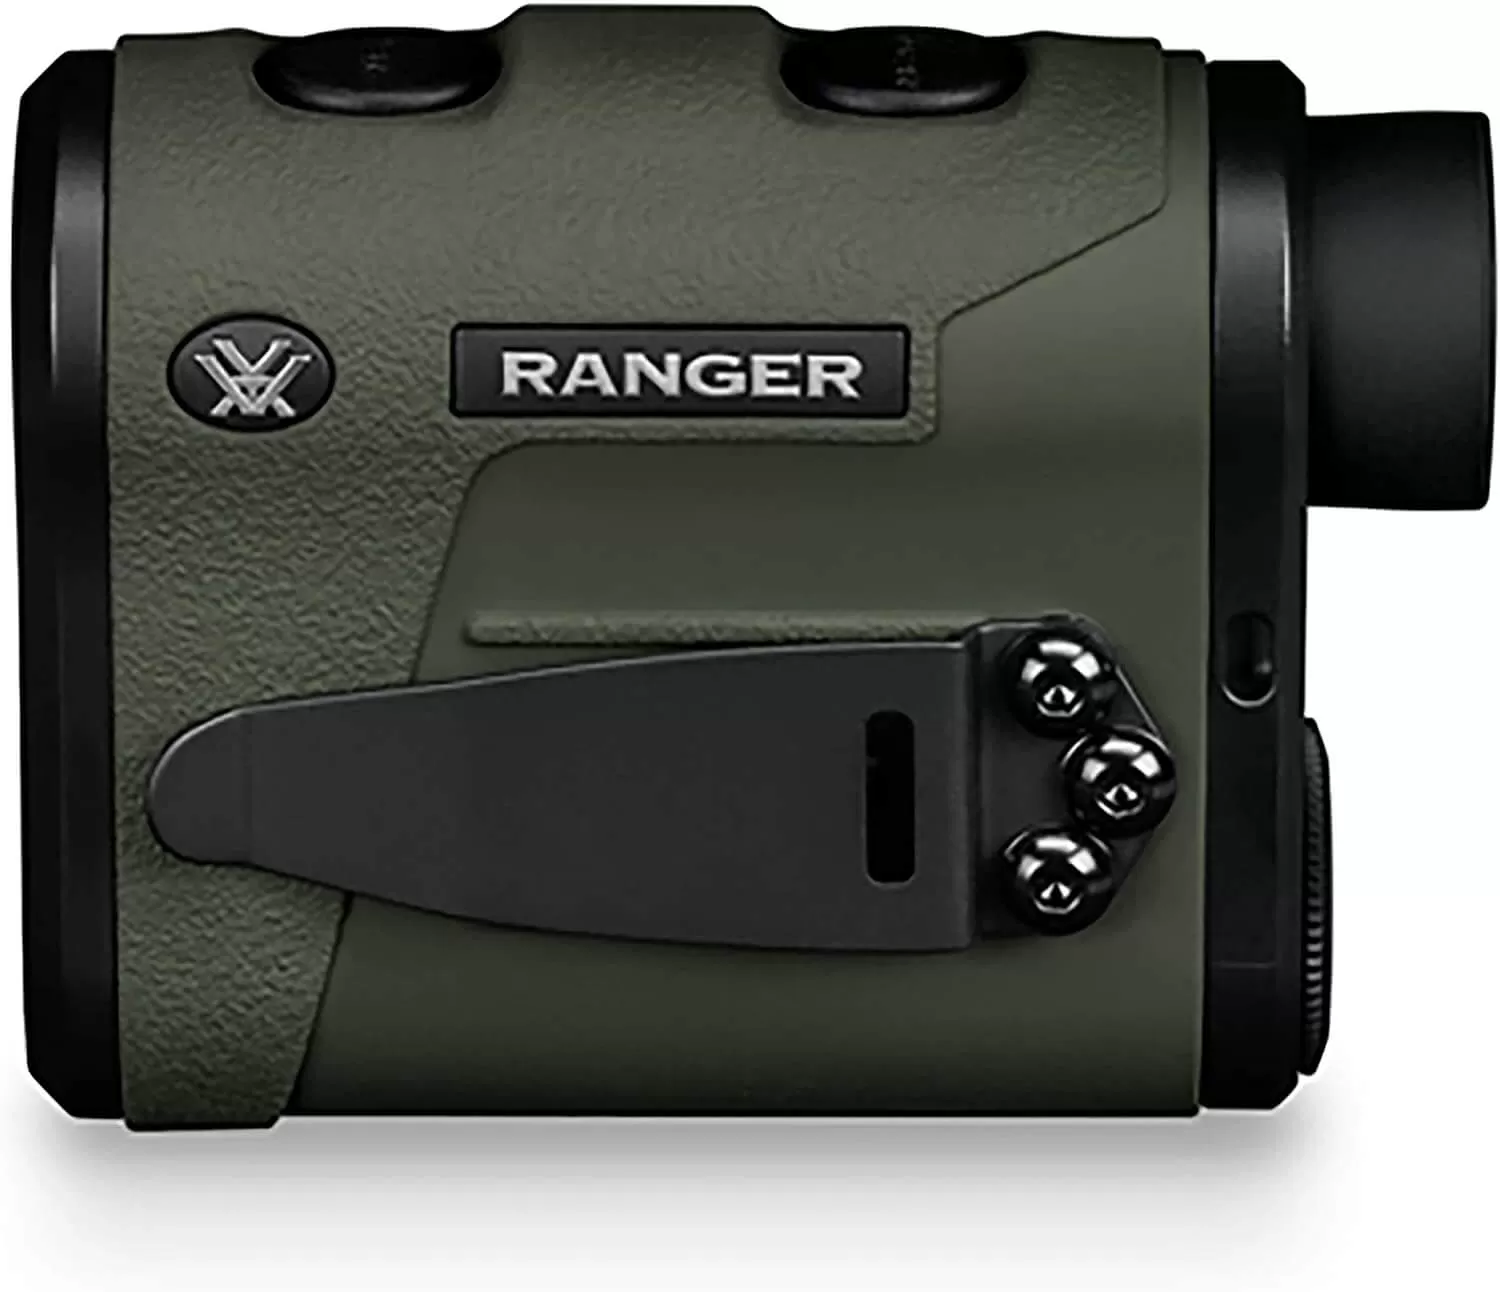 Vortex Optics Ranger 1800 Laser - best hunting rangefinder with Angle Compensation